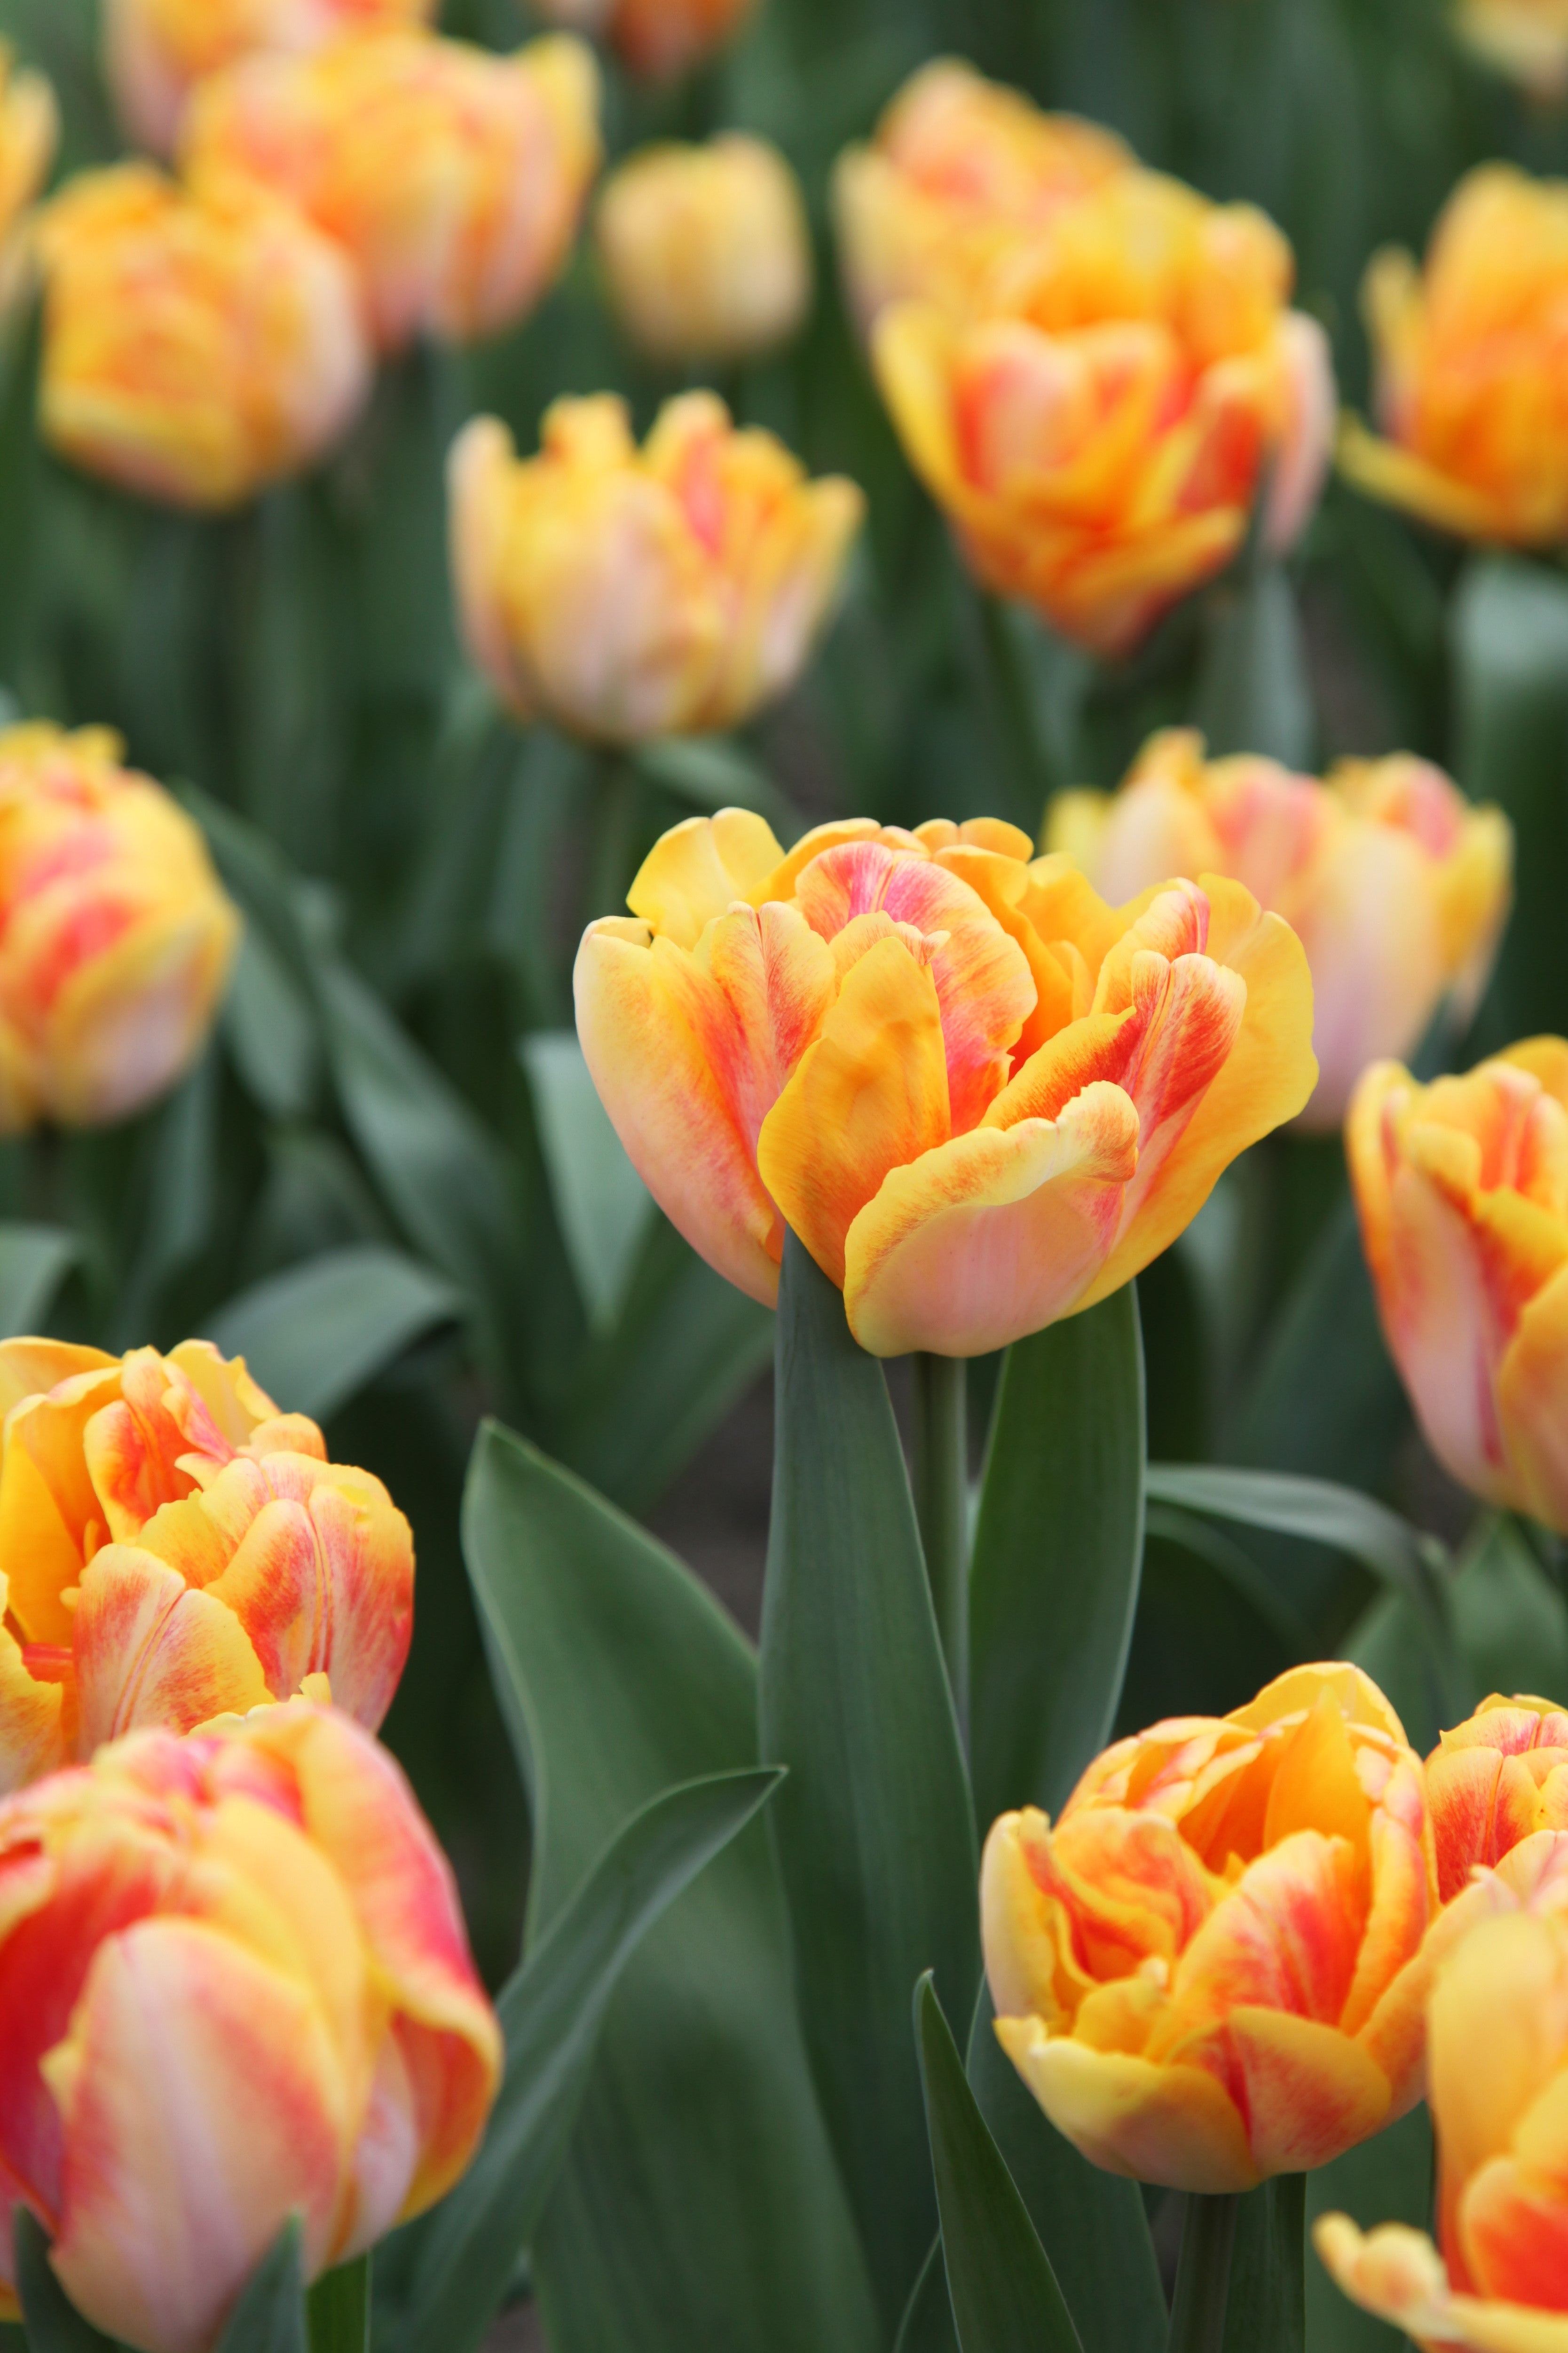 Double late tulip foxy foxtrot has gorgous red, orange, red full petals.